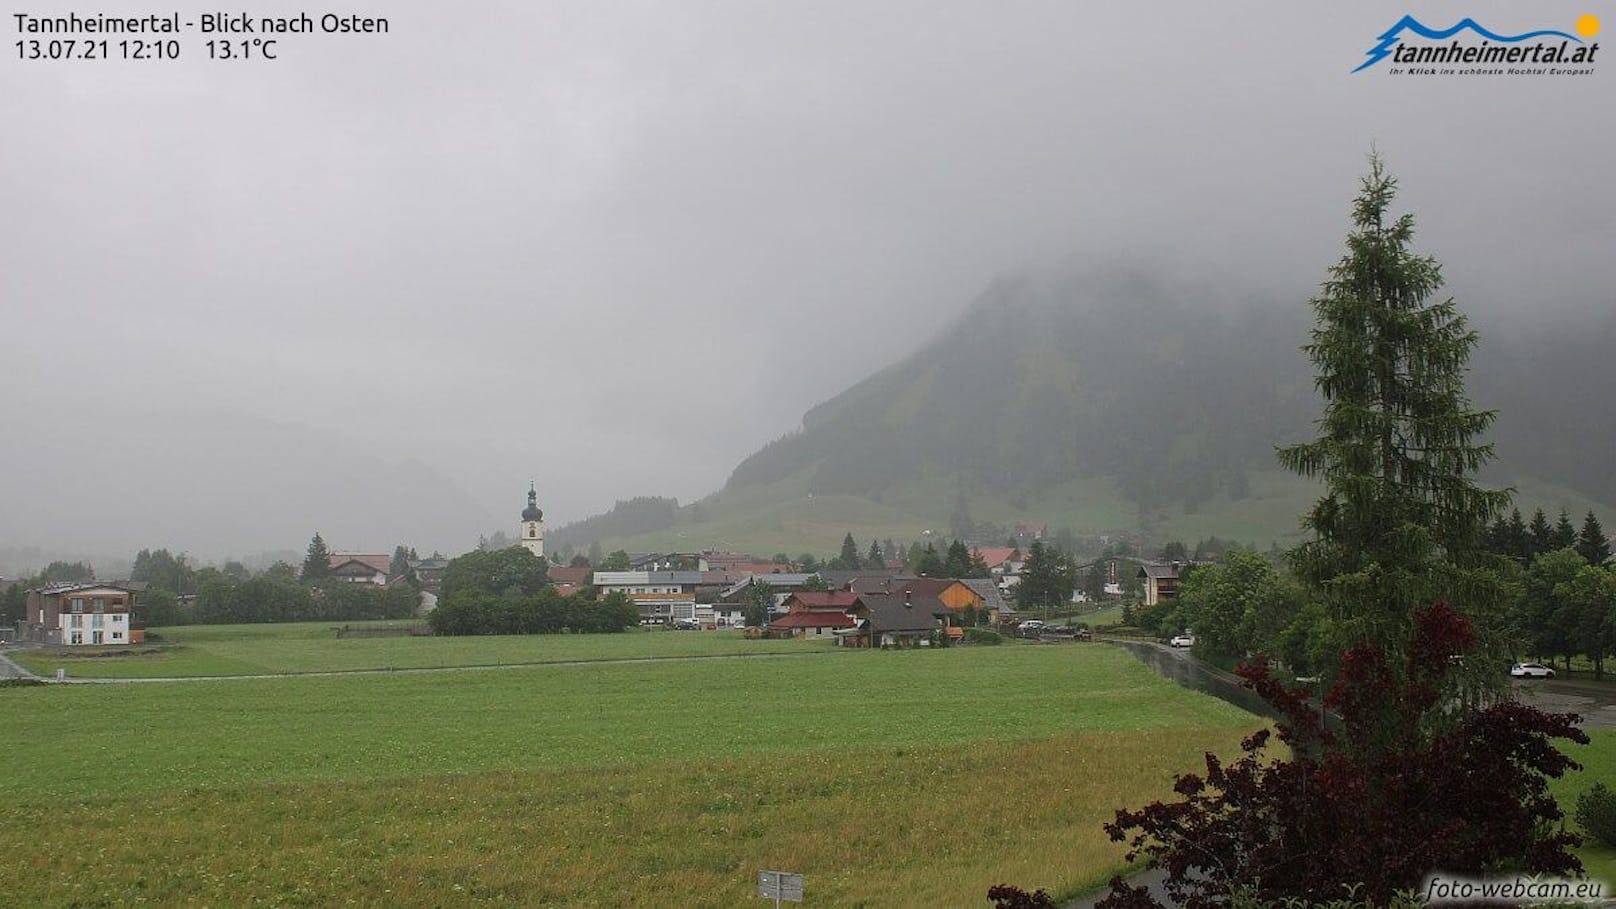 Kräftige Regenschauer in Tirol